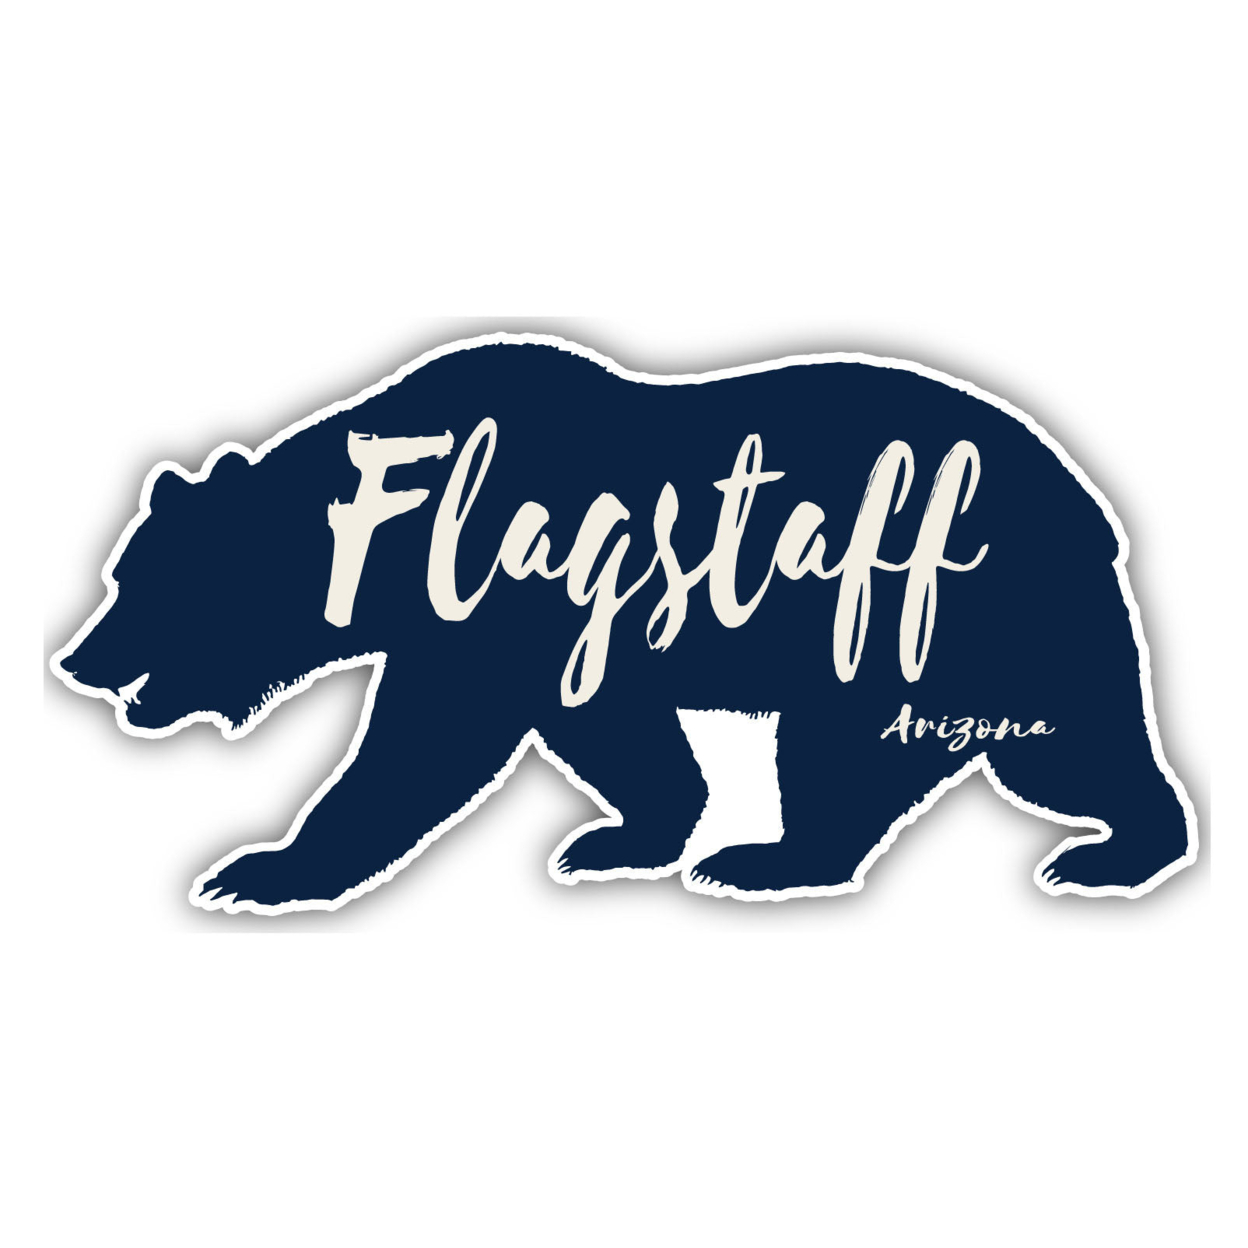 Flagstaff Arizona Souvenir Decorative Stickers (Choose Theme And Size) - Single Unit, 4-Inch, Bear